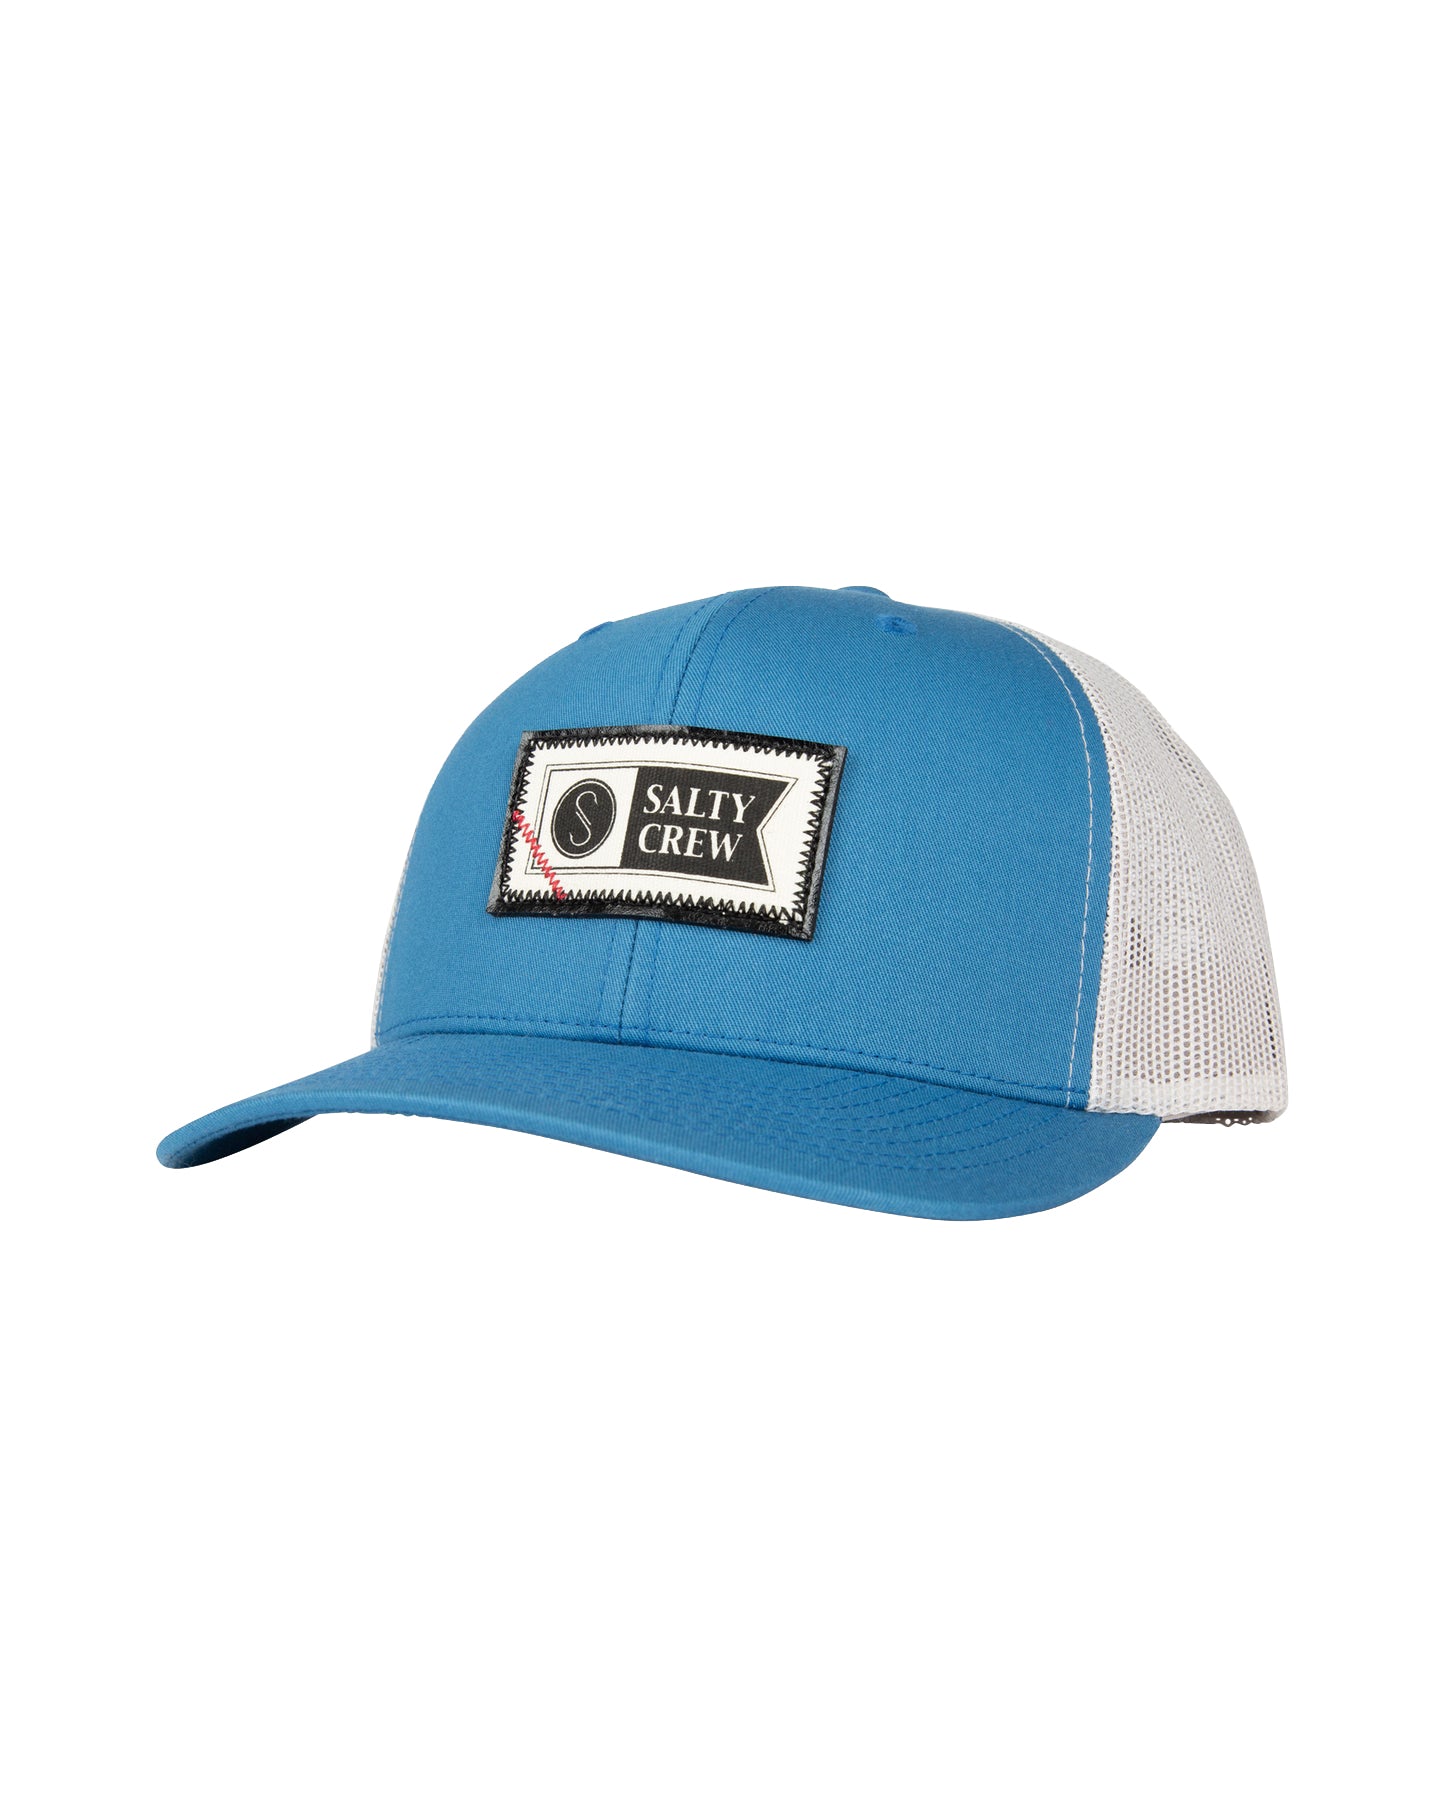 Salty Crew Topstitch Retro Trucker Hat Slate/Silver OS